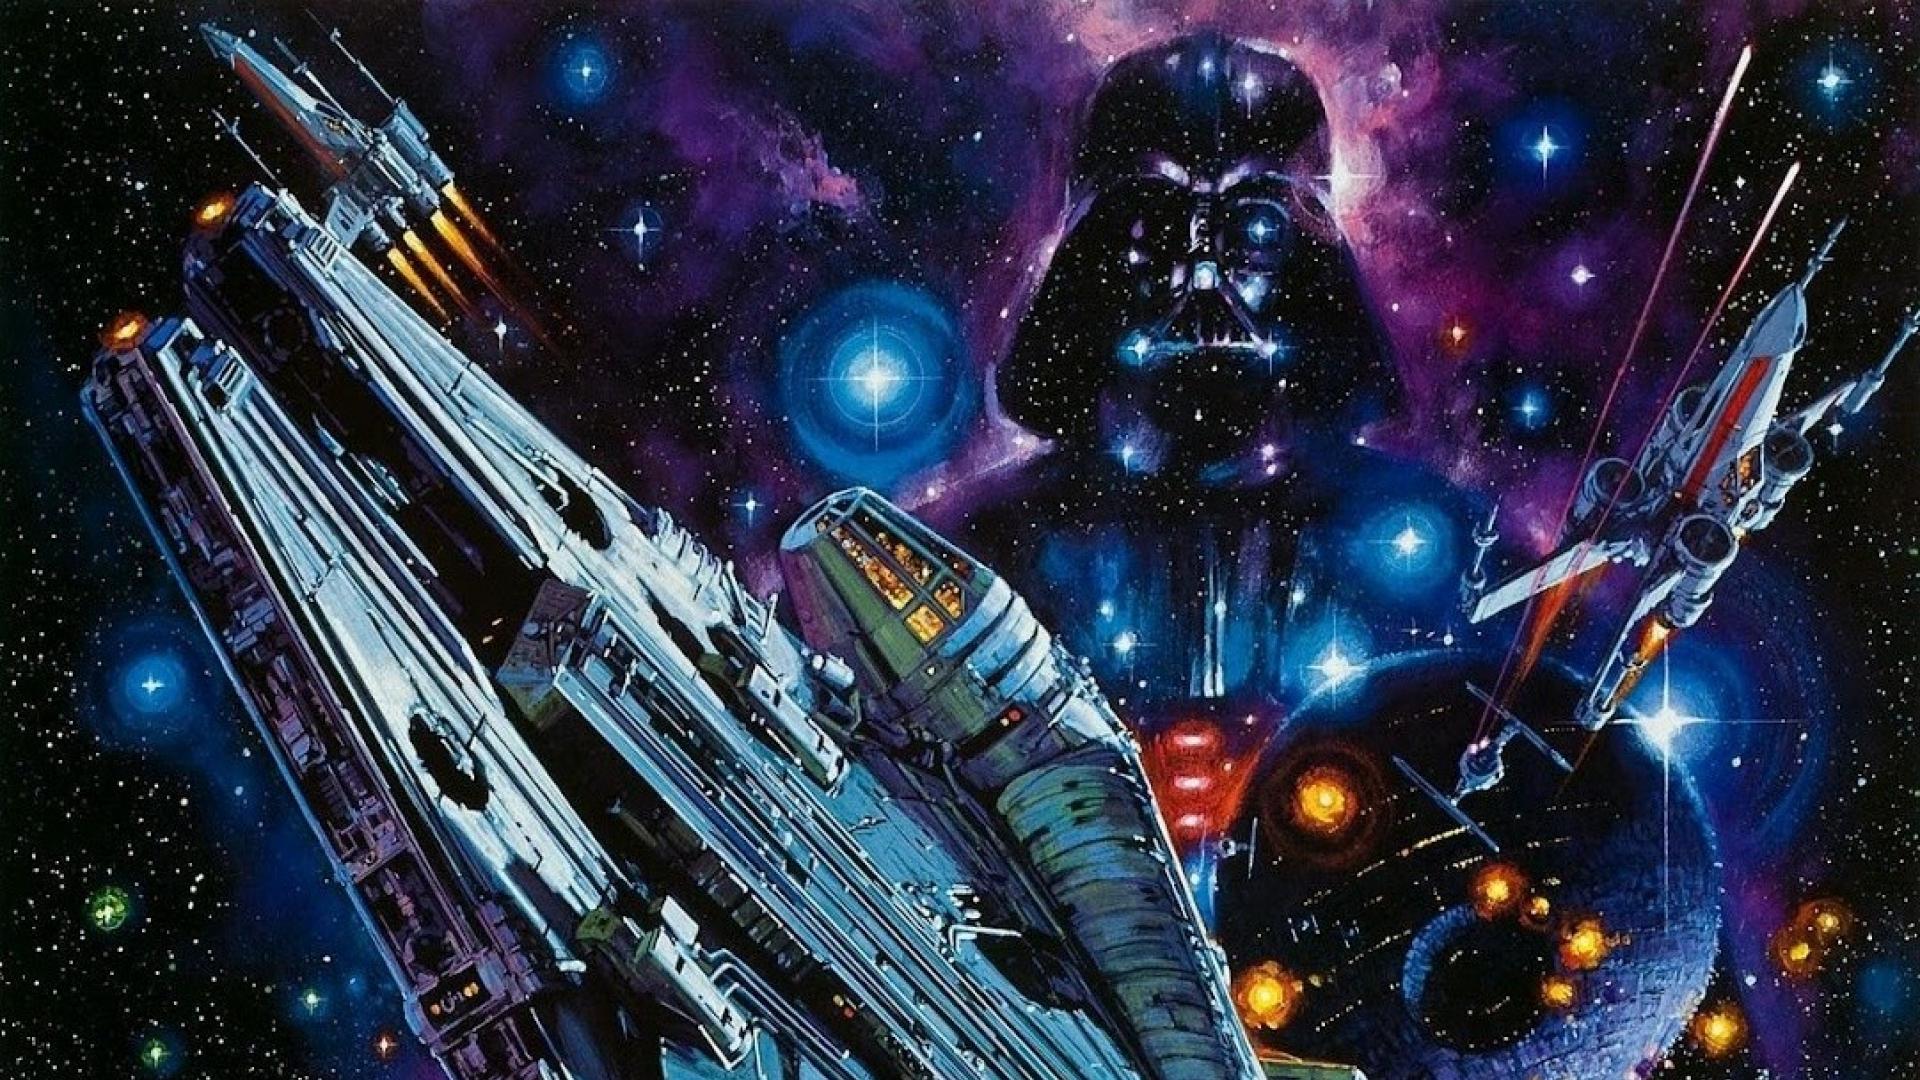 Darth Vader Death Star Millennium Falcon Wars X Wing Wallpaper